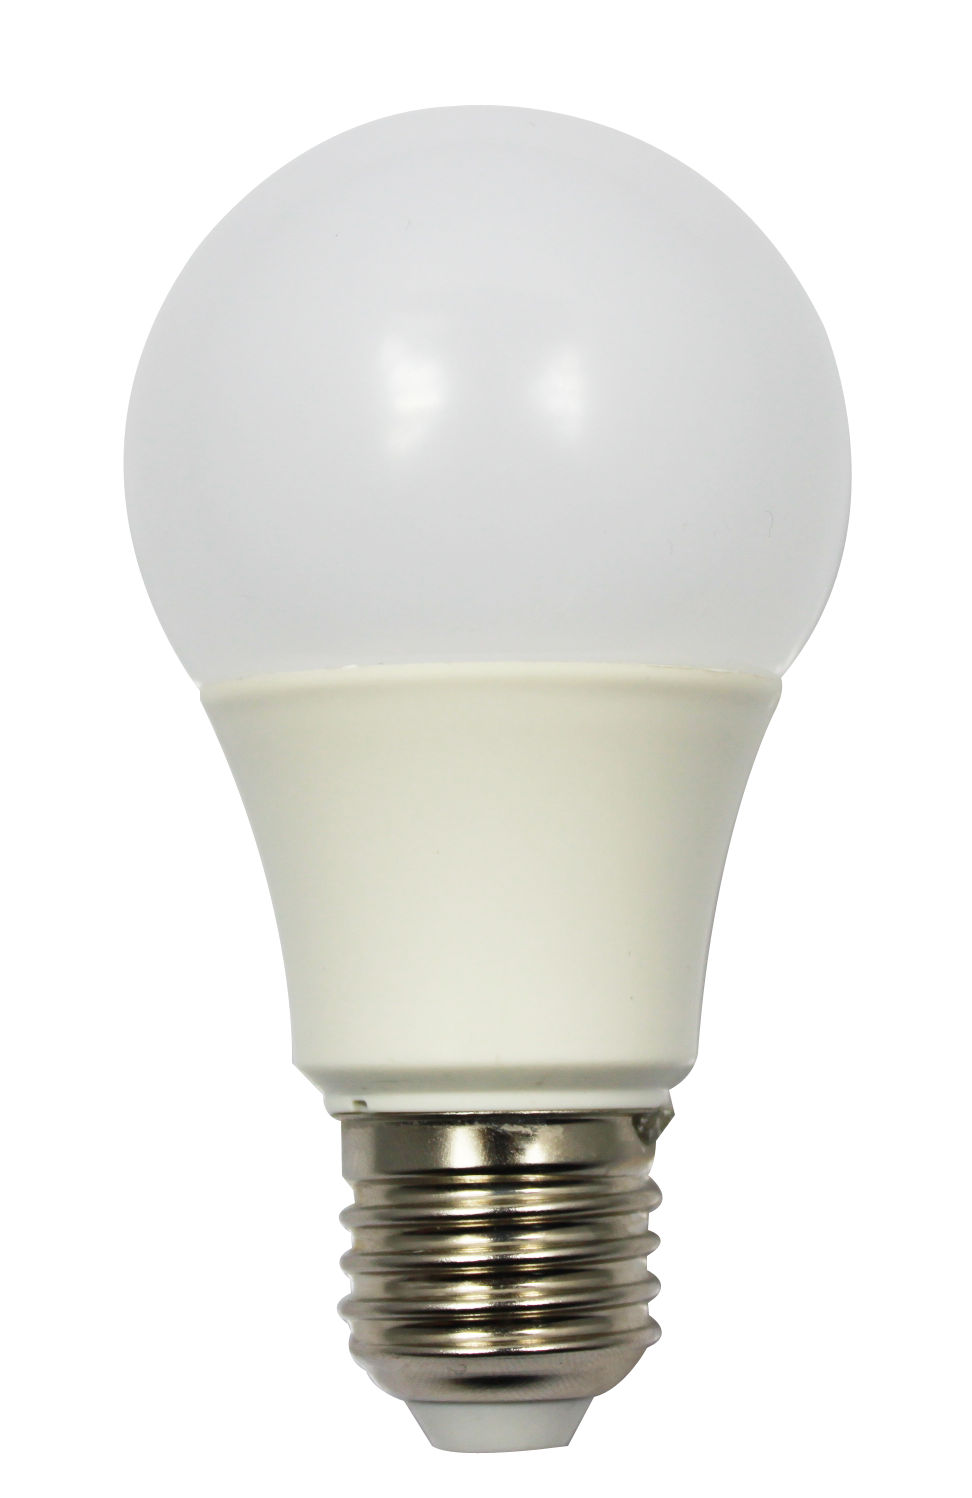 Download Png Light Bulb | PNG & GIF BASE